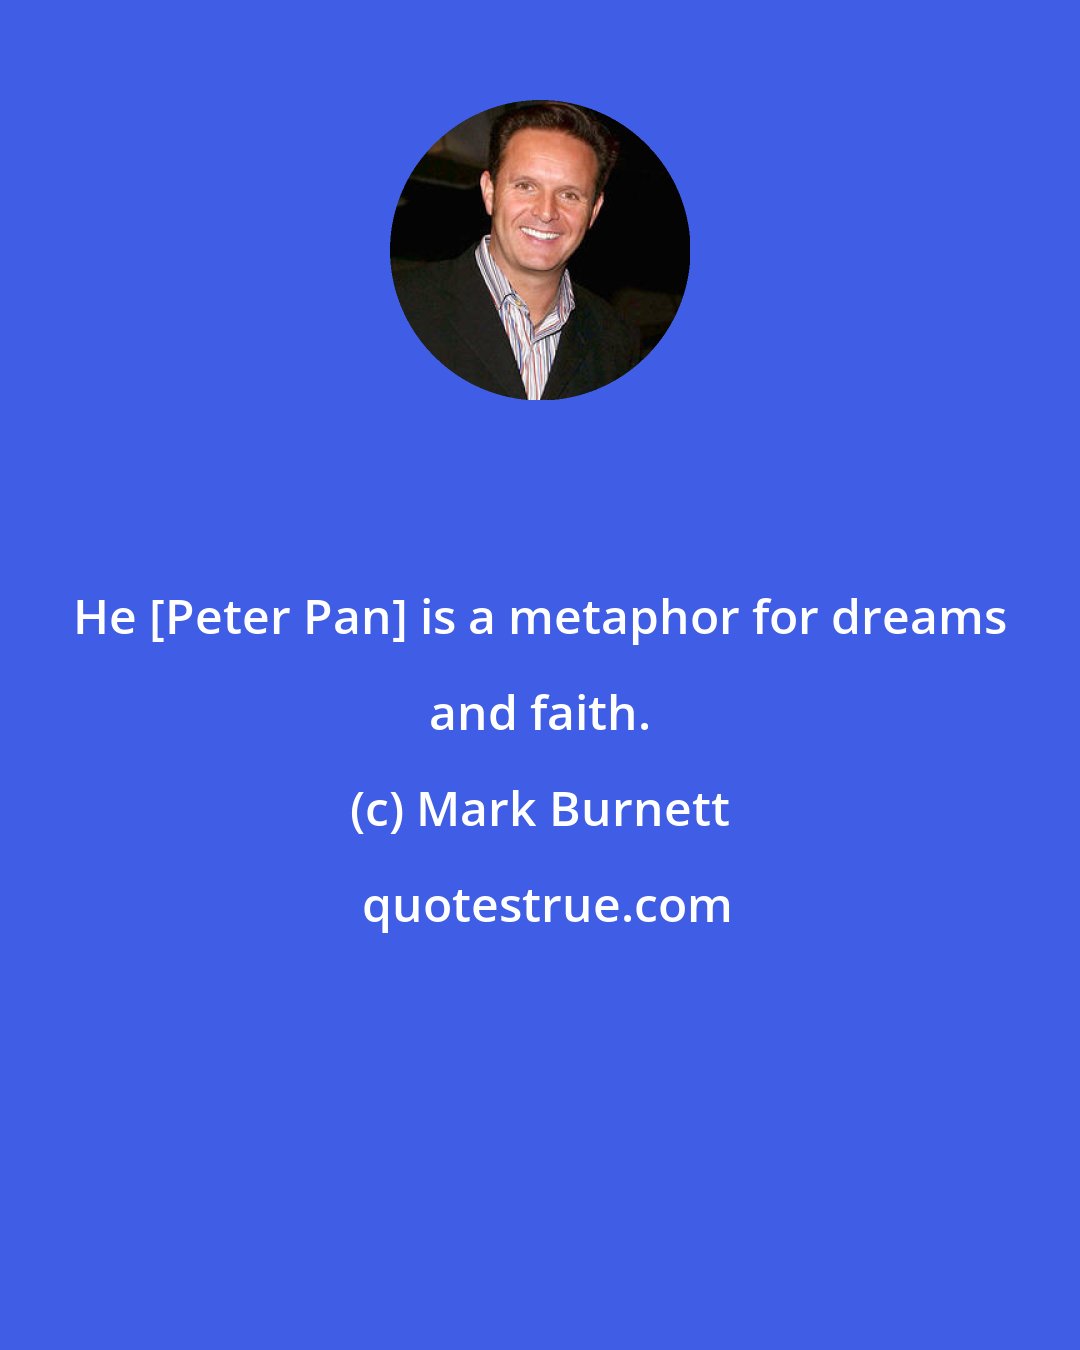 Mark Burnett: He [Peter Pan] is a metaphor for dreams and faith.